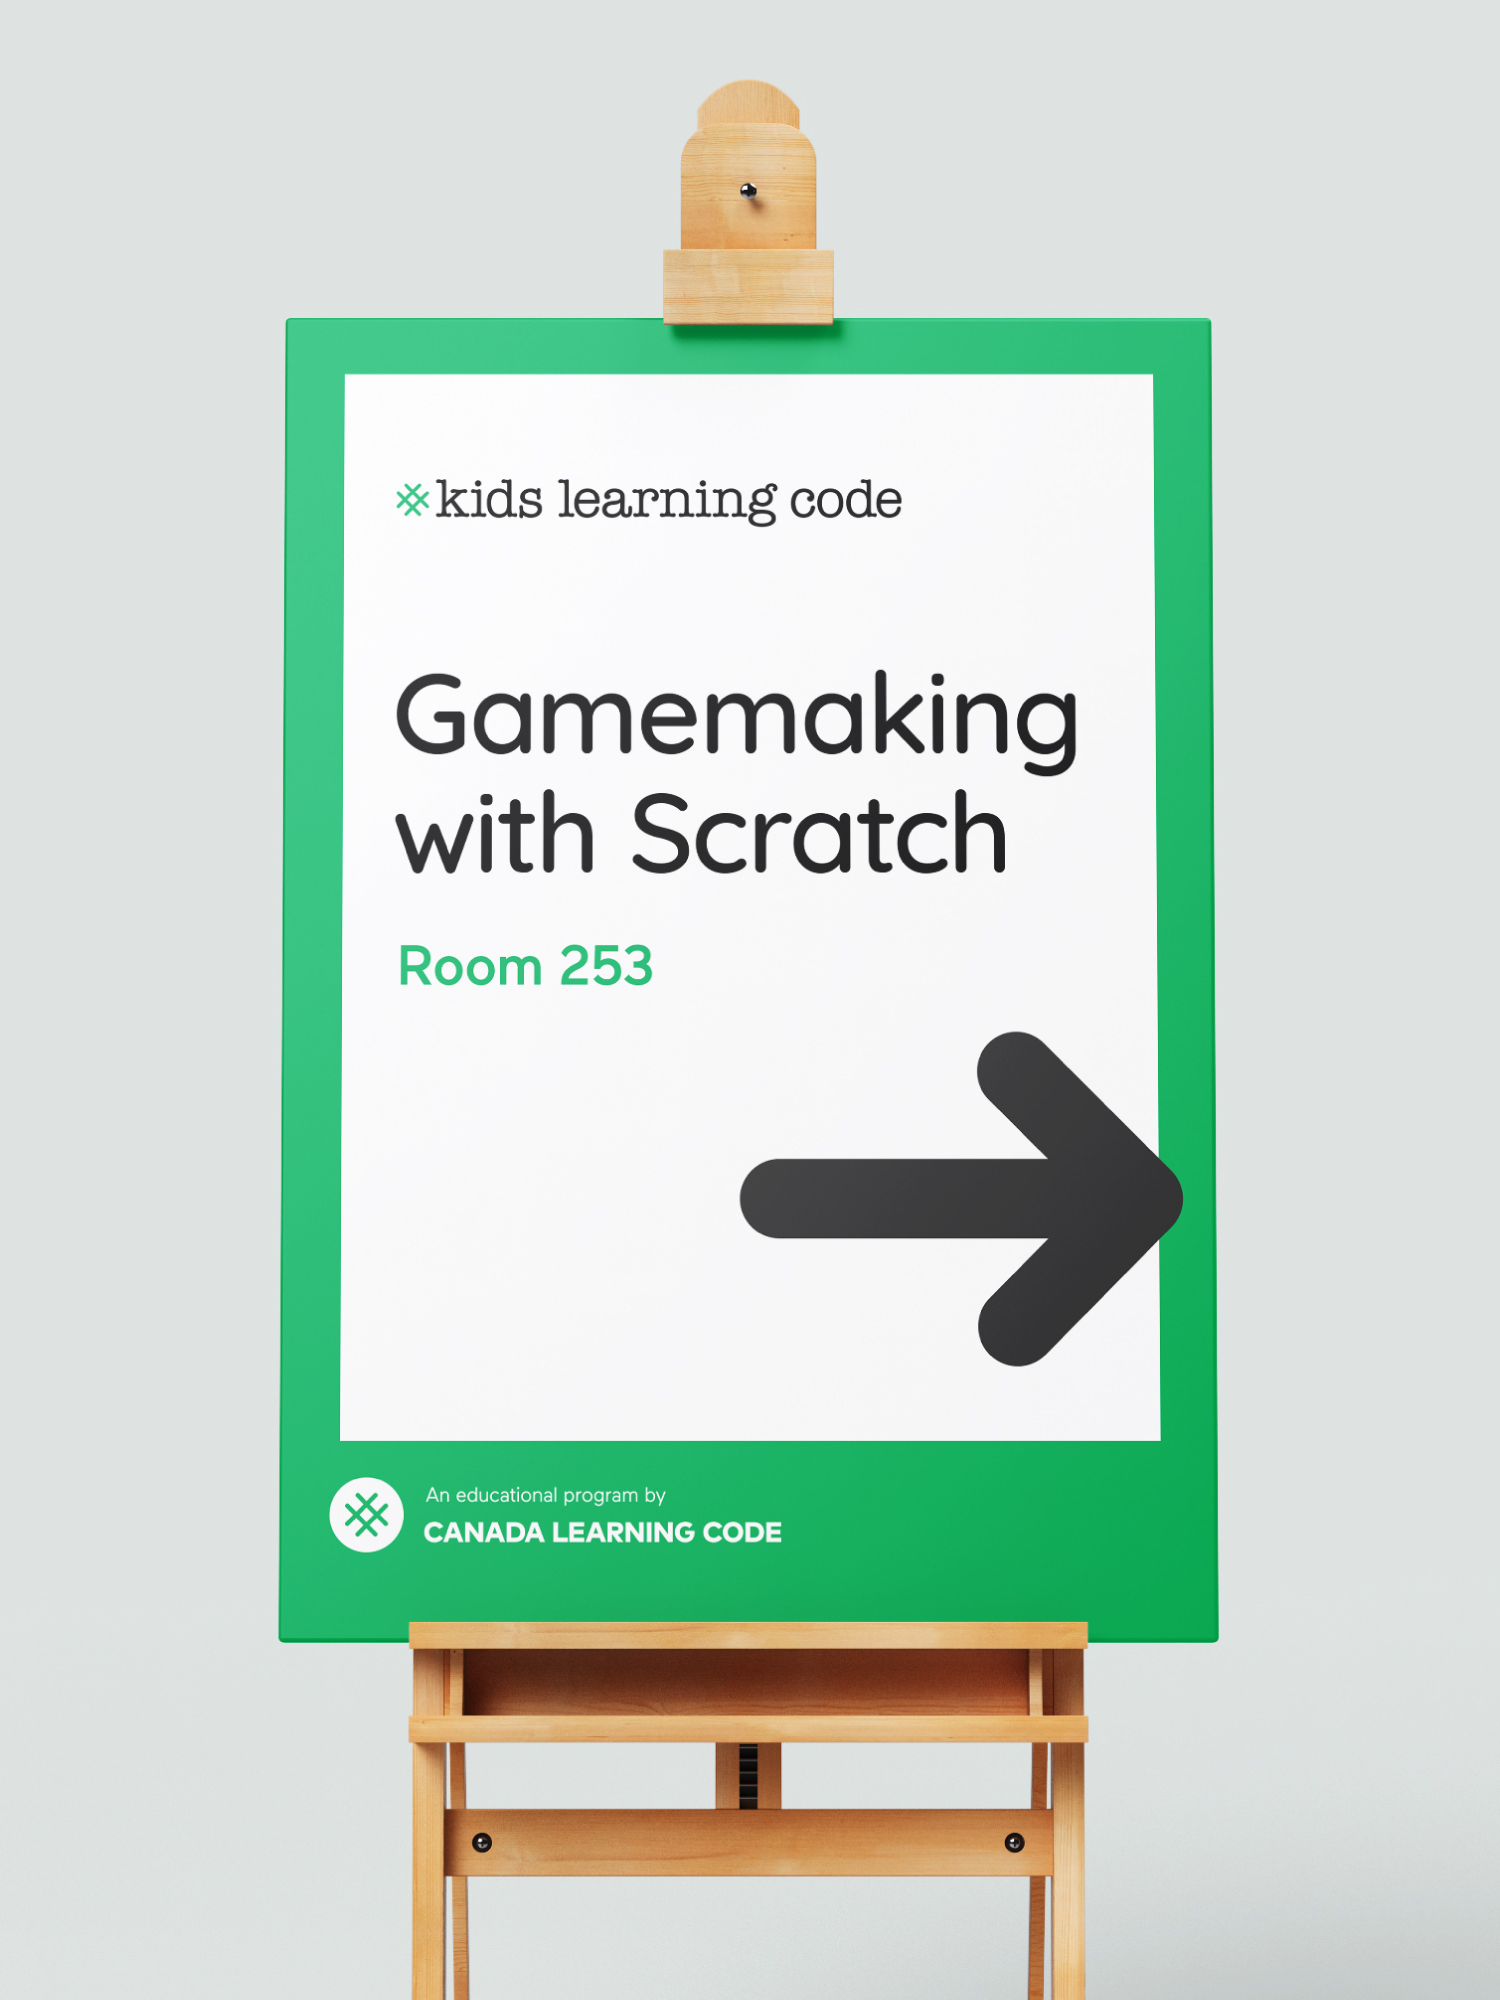 Printed wayfinding poster design for a Kids Learning Code workshop event